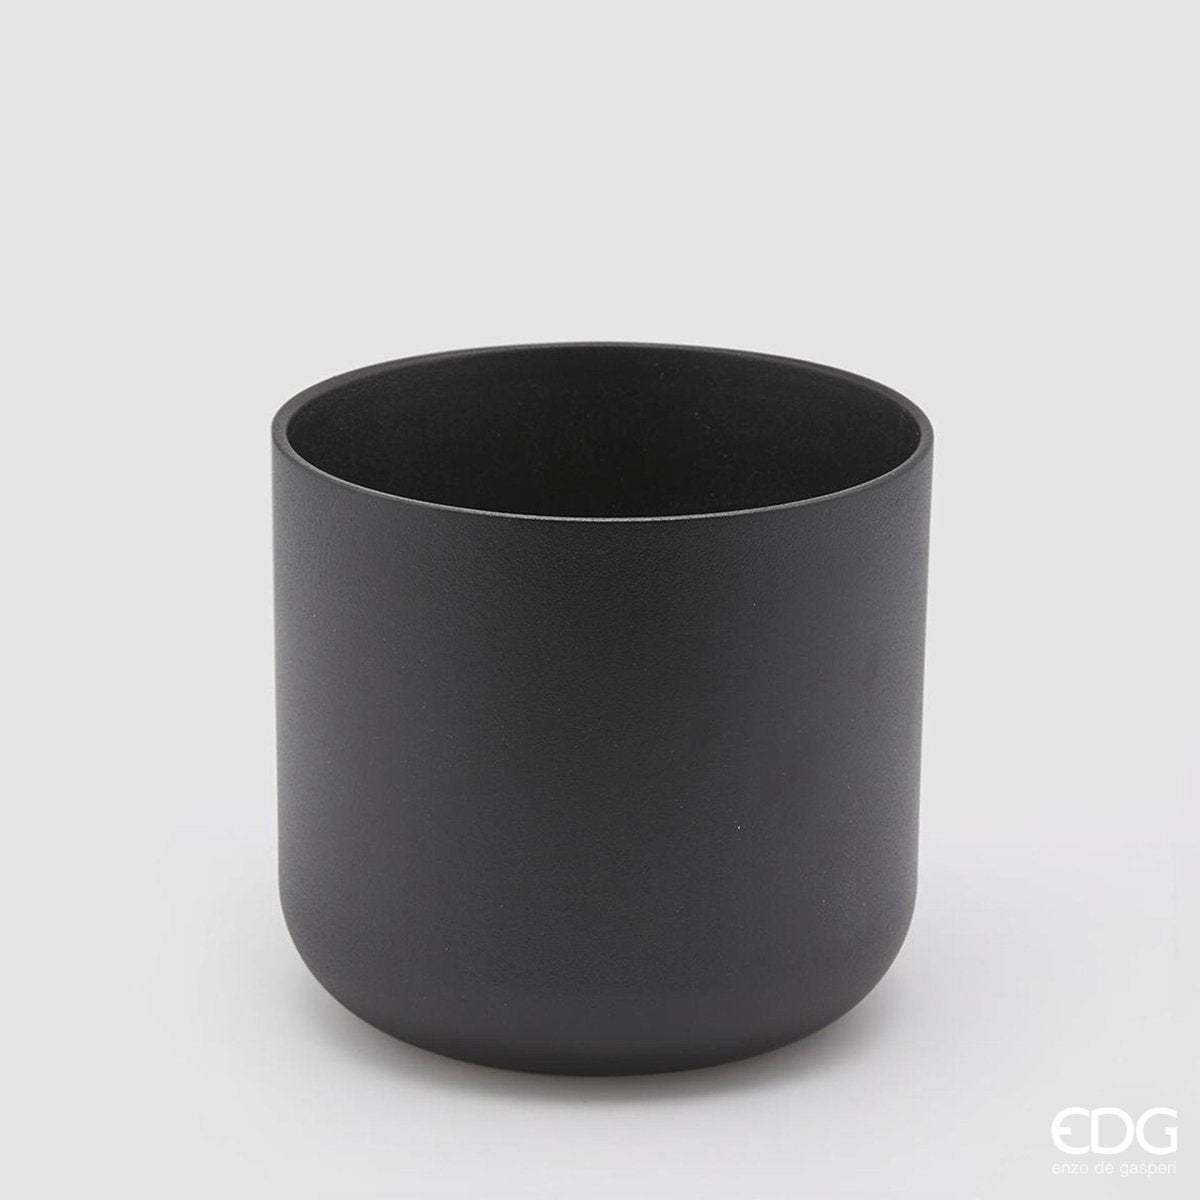 Edg - vaso ceramica classic black h15 | rohome - Rohome